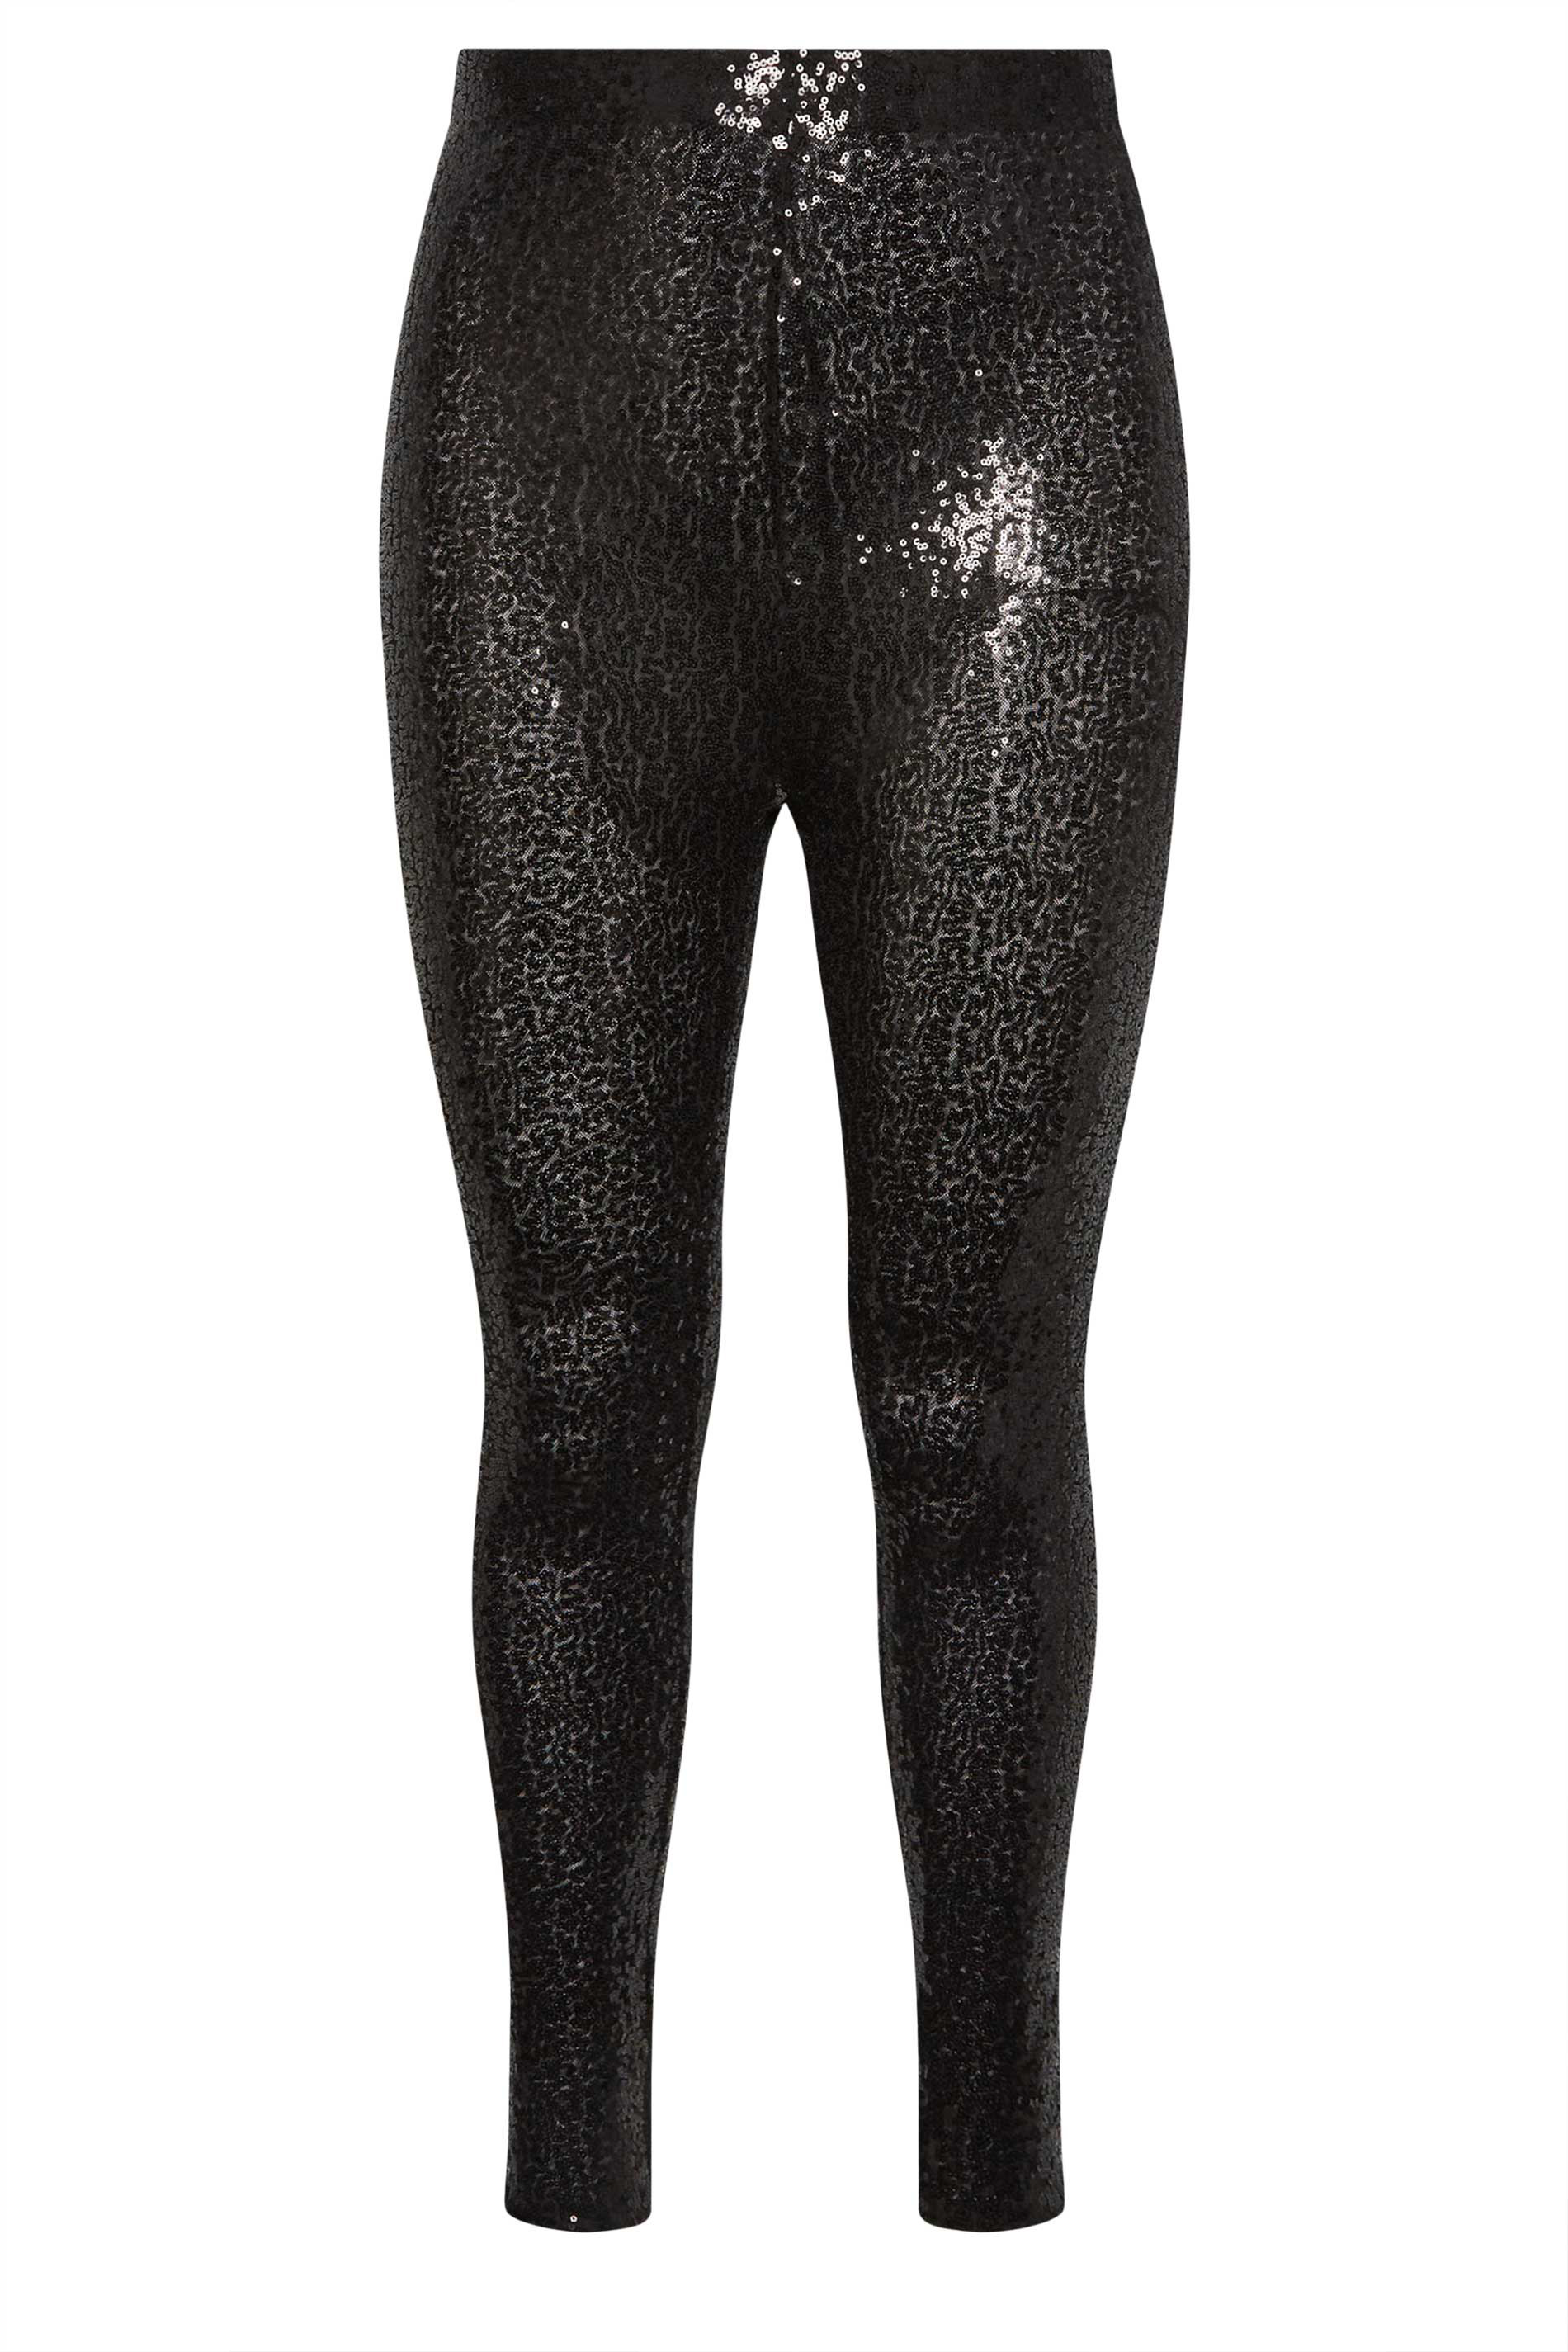 Shop Plus Size Natural Sparkle Legging in Black, Sizes 12-30